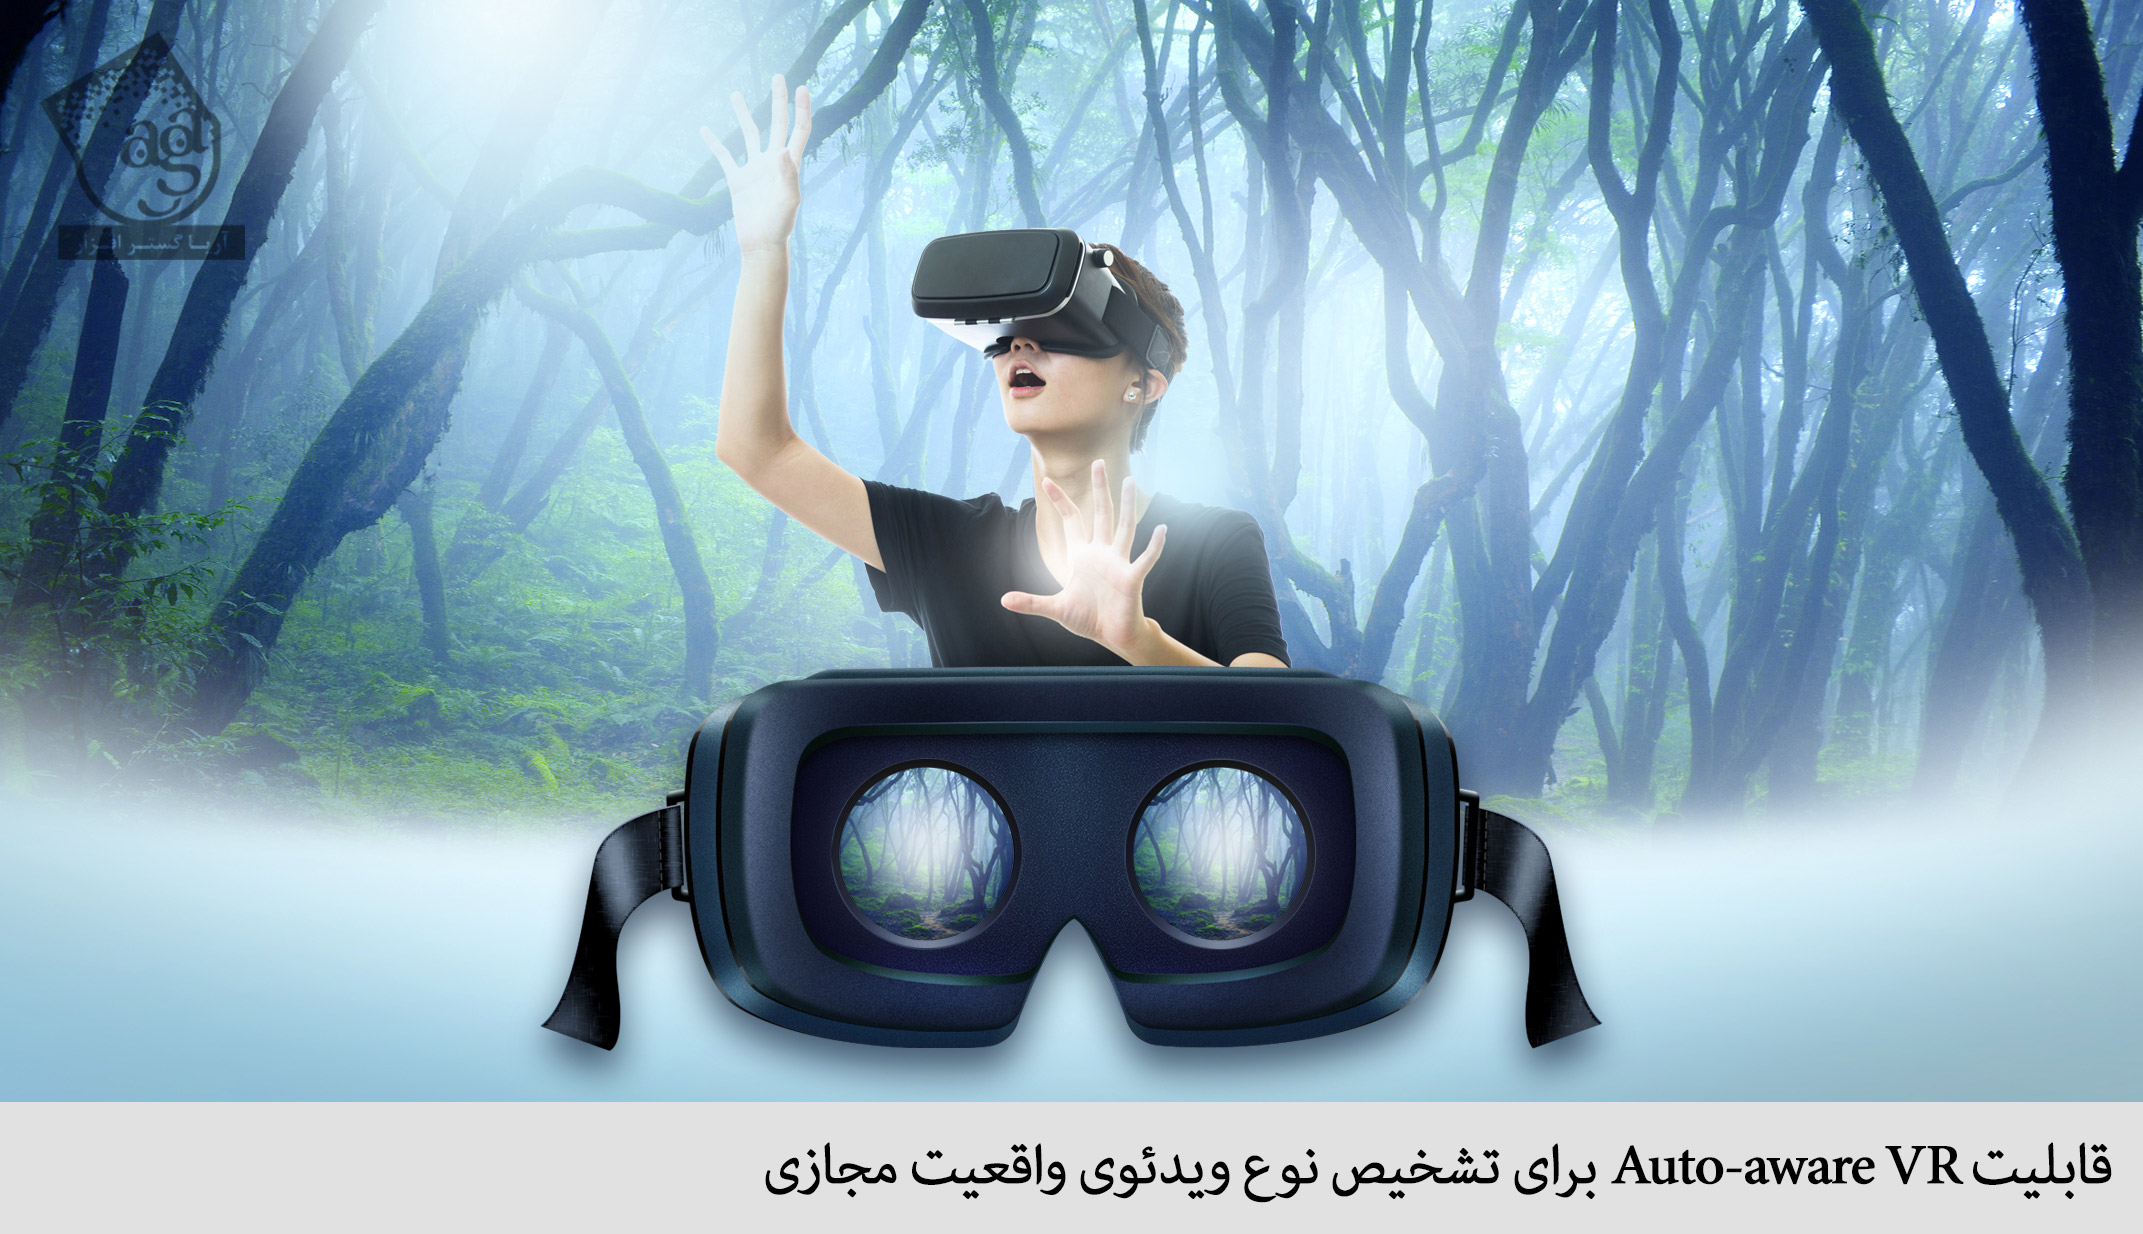 O vr. Виар очки вр360. Очки виртуальной реальности для детей. Очки виртуальной реальности на человеке. Вид в очках виртуальной реальности.